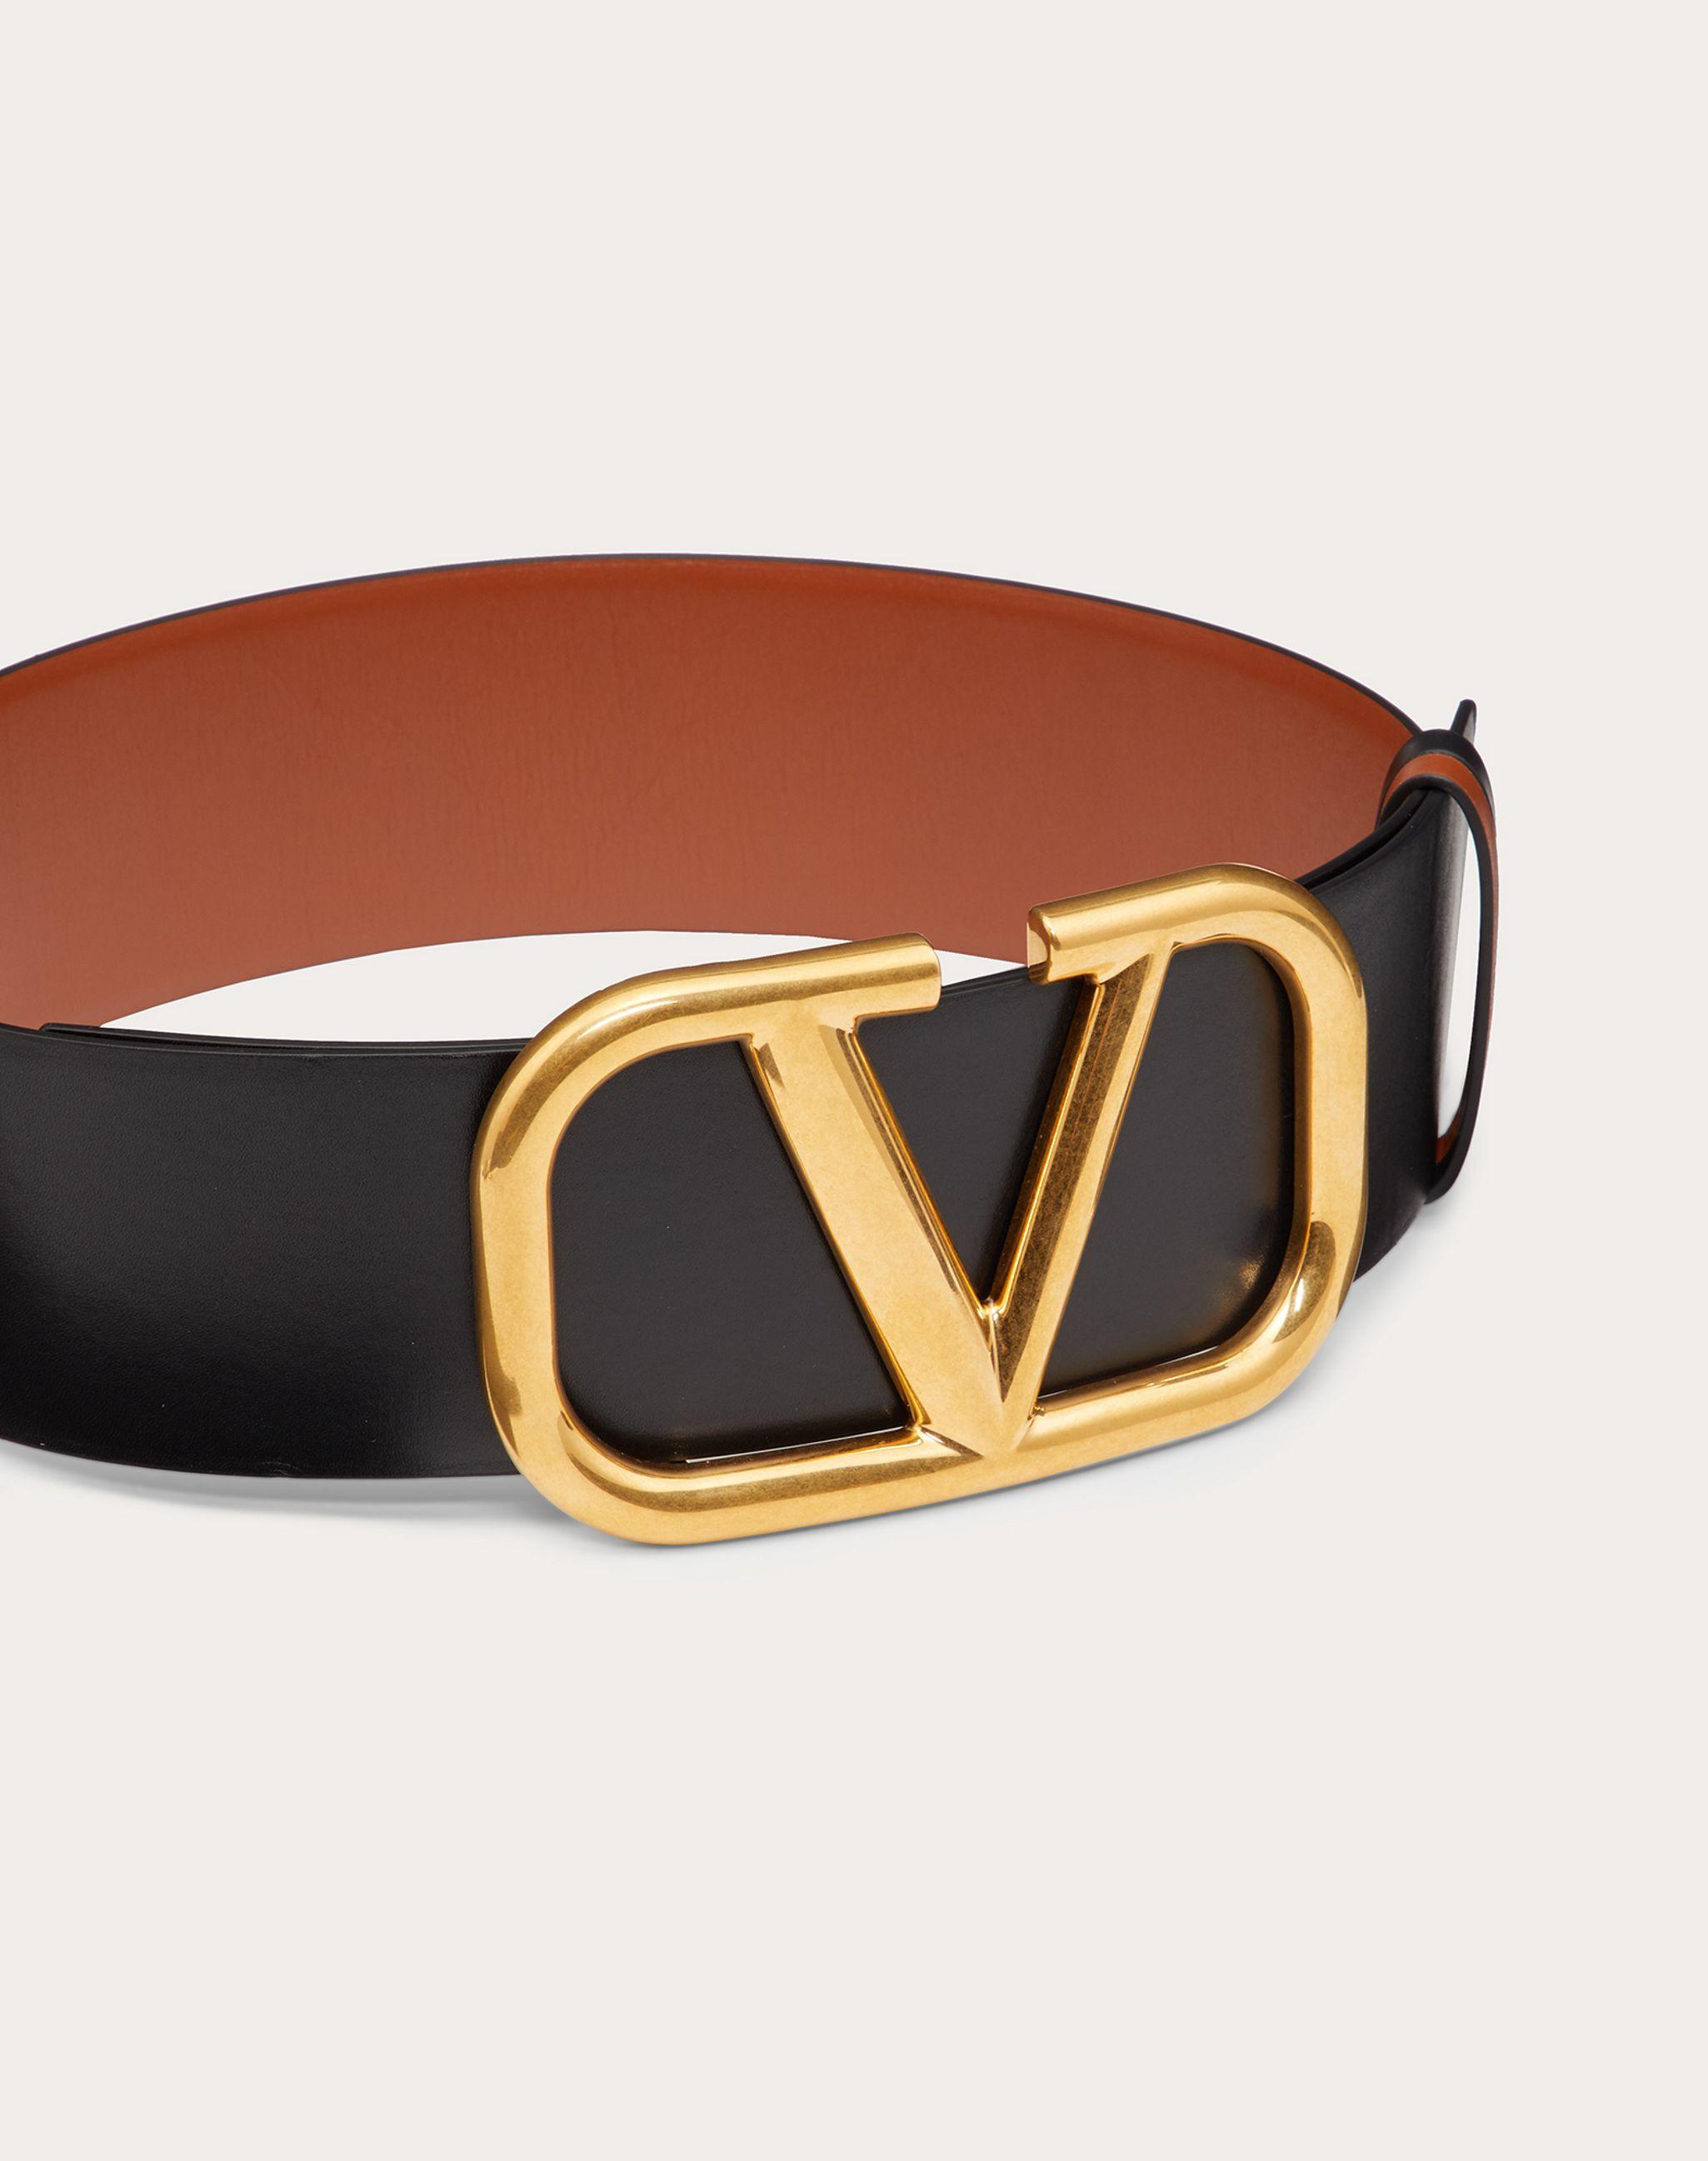 Valentino Garavani Women's Vlogo Signature Reversible Belt in Shiny and Metallic Calfskin 20mm - Belts